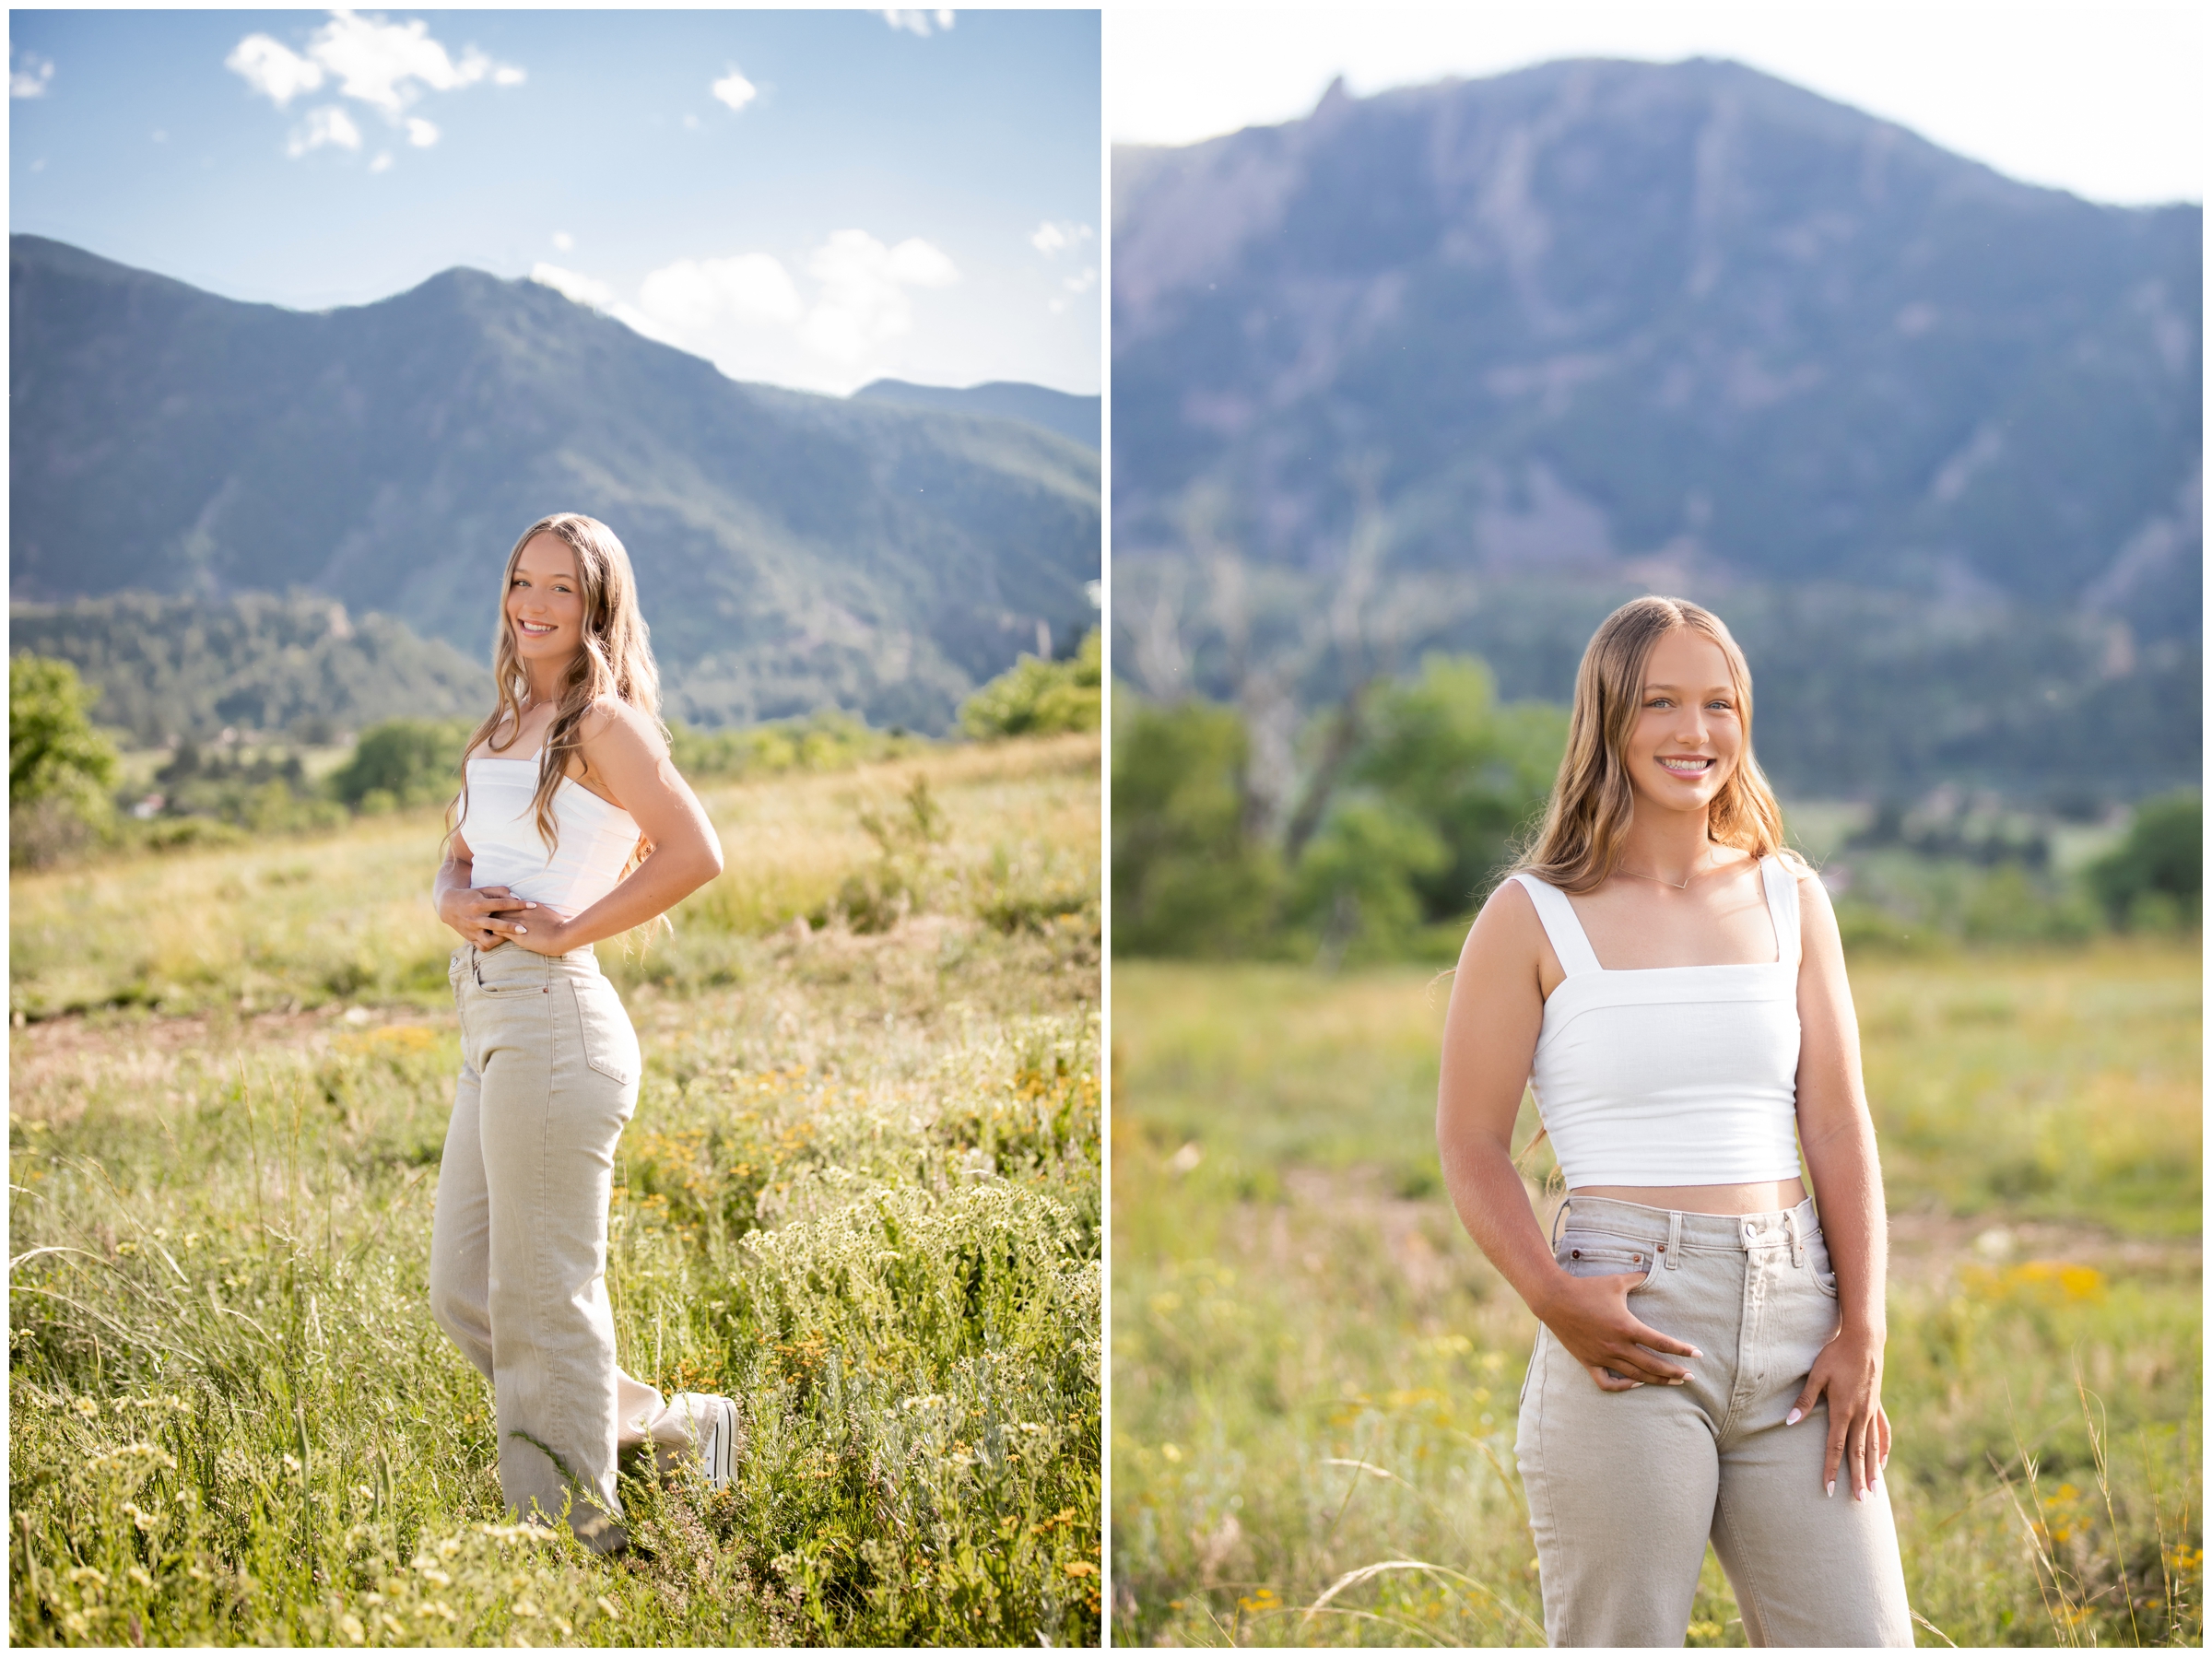 Colorado graduation photo session at South Mesa Trail 